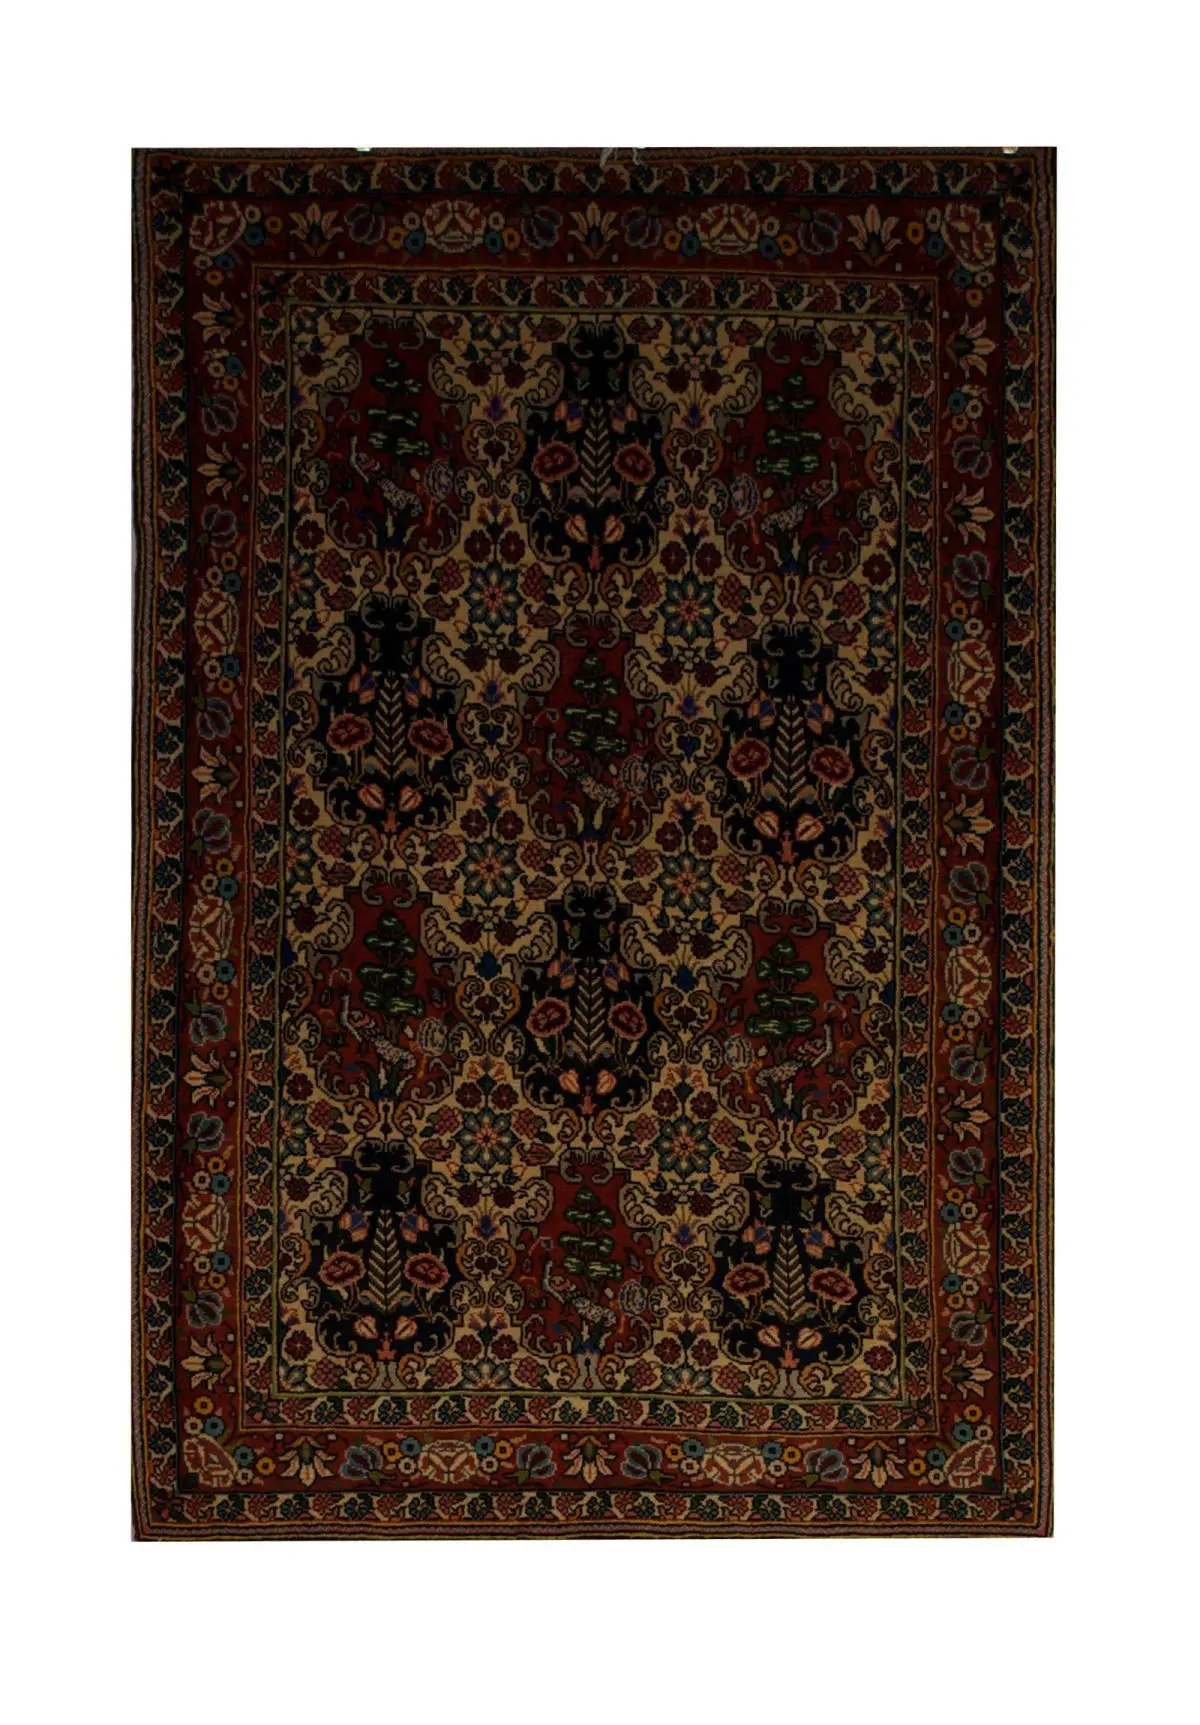 Persian Bakhtiari rug 3' 4" x 5' Handmade Area Rug - Shabahang Royal Carpet